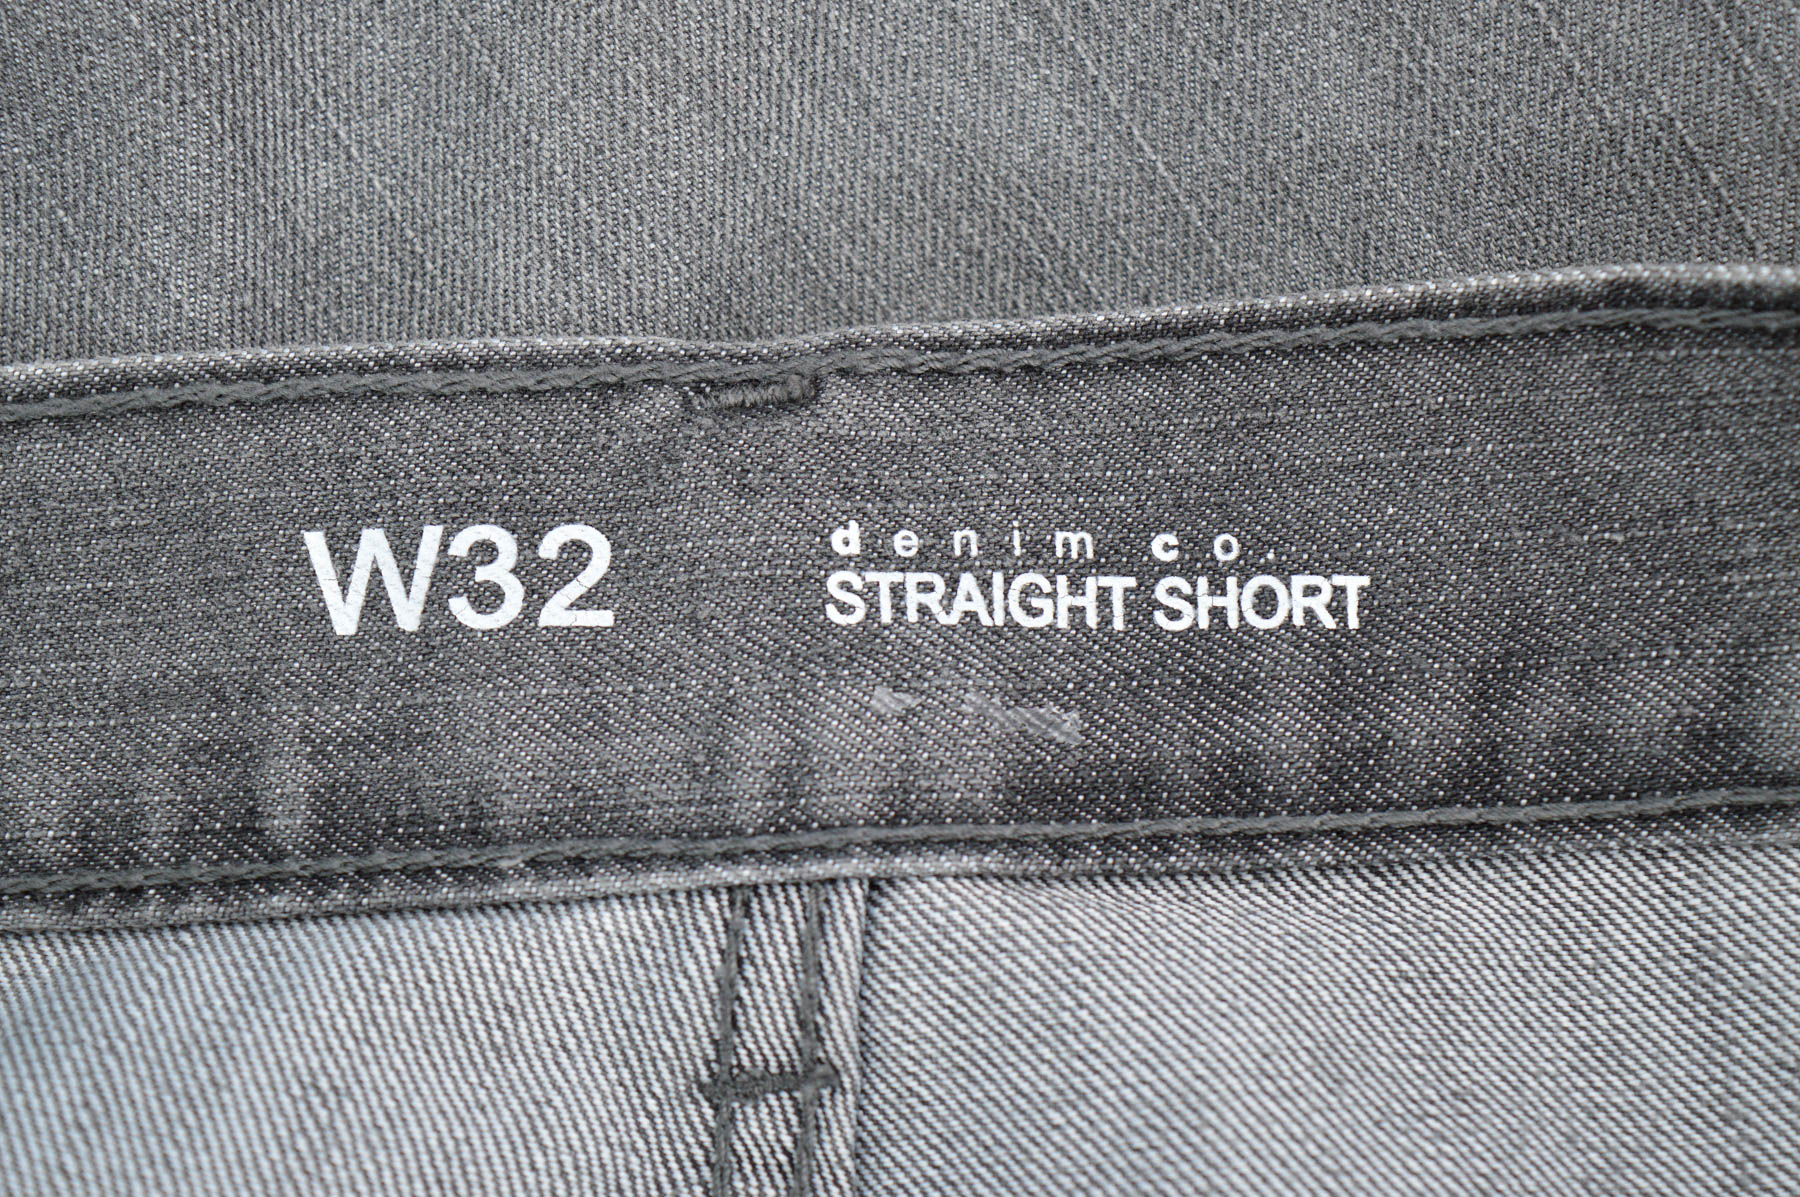 Men's shorts - Denim Co - 2